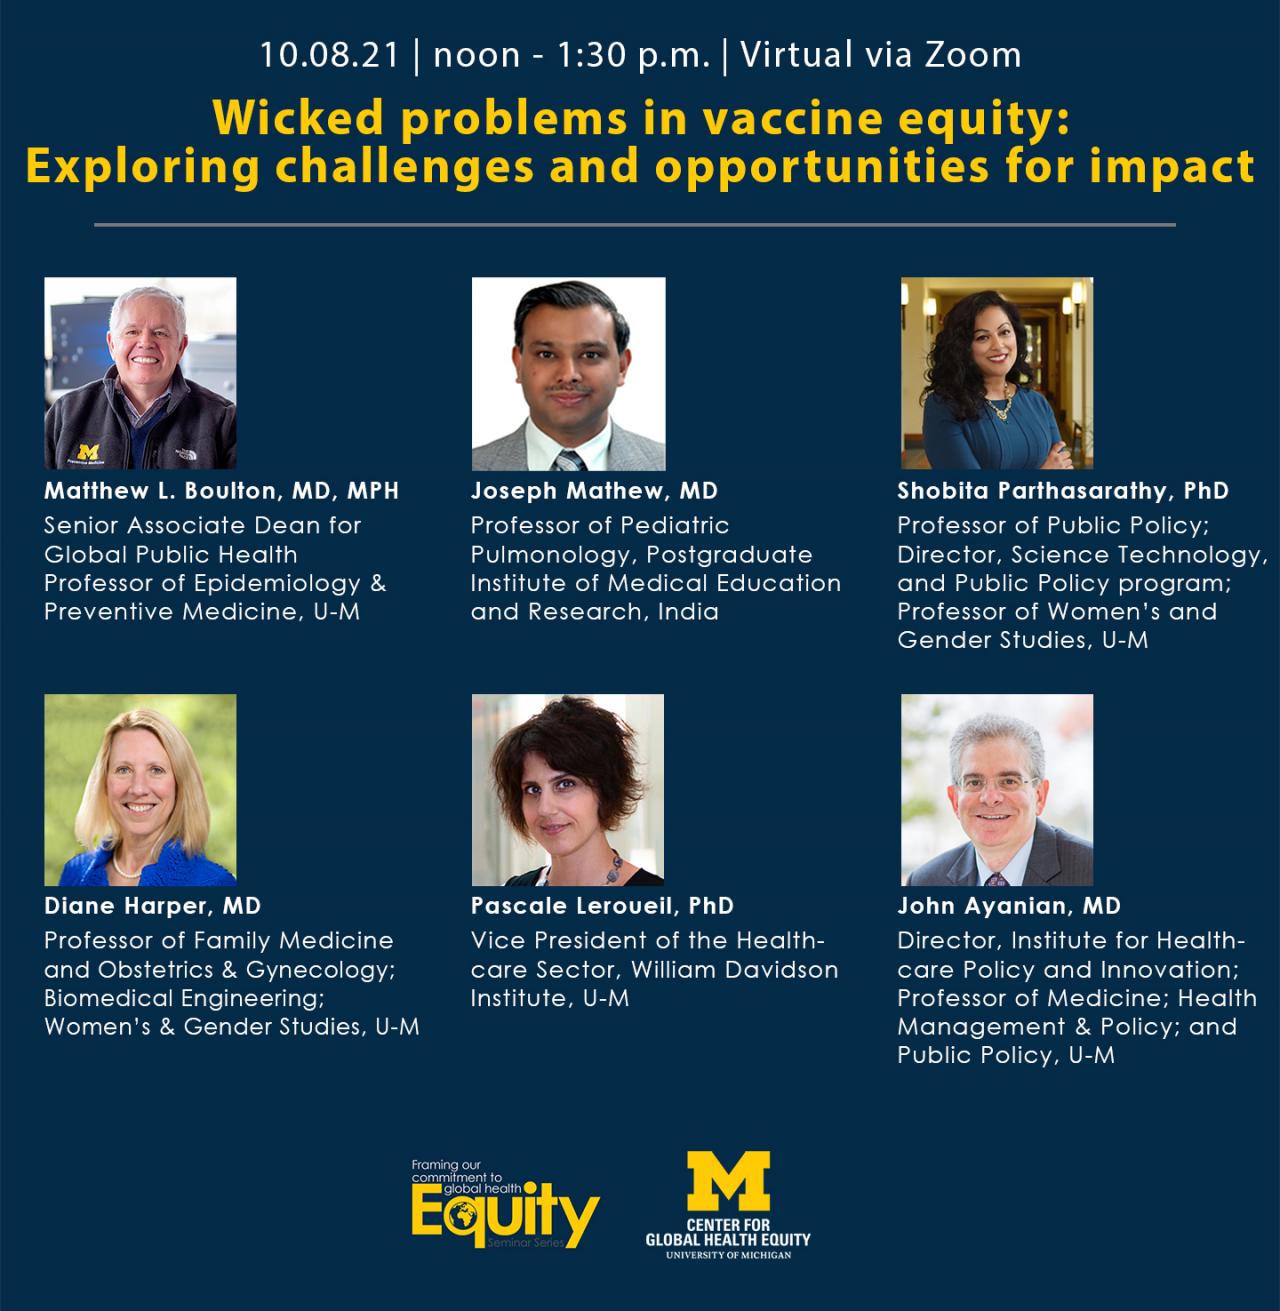 Vaccine equity panelists